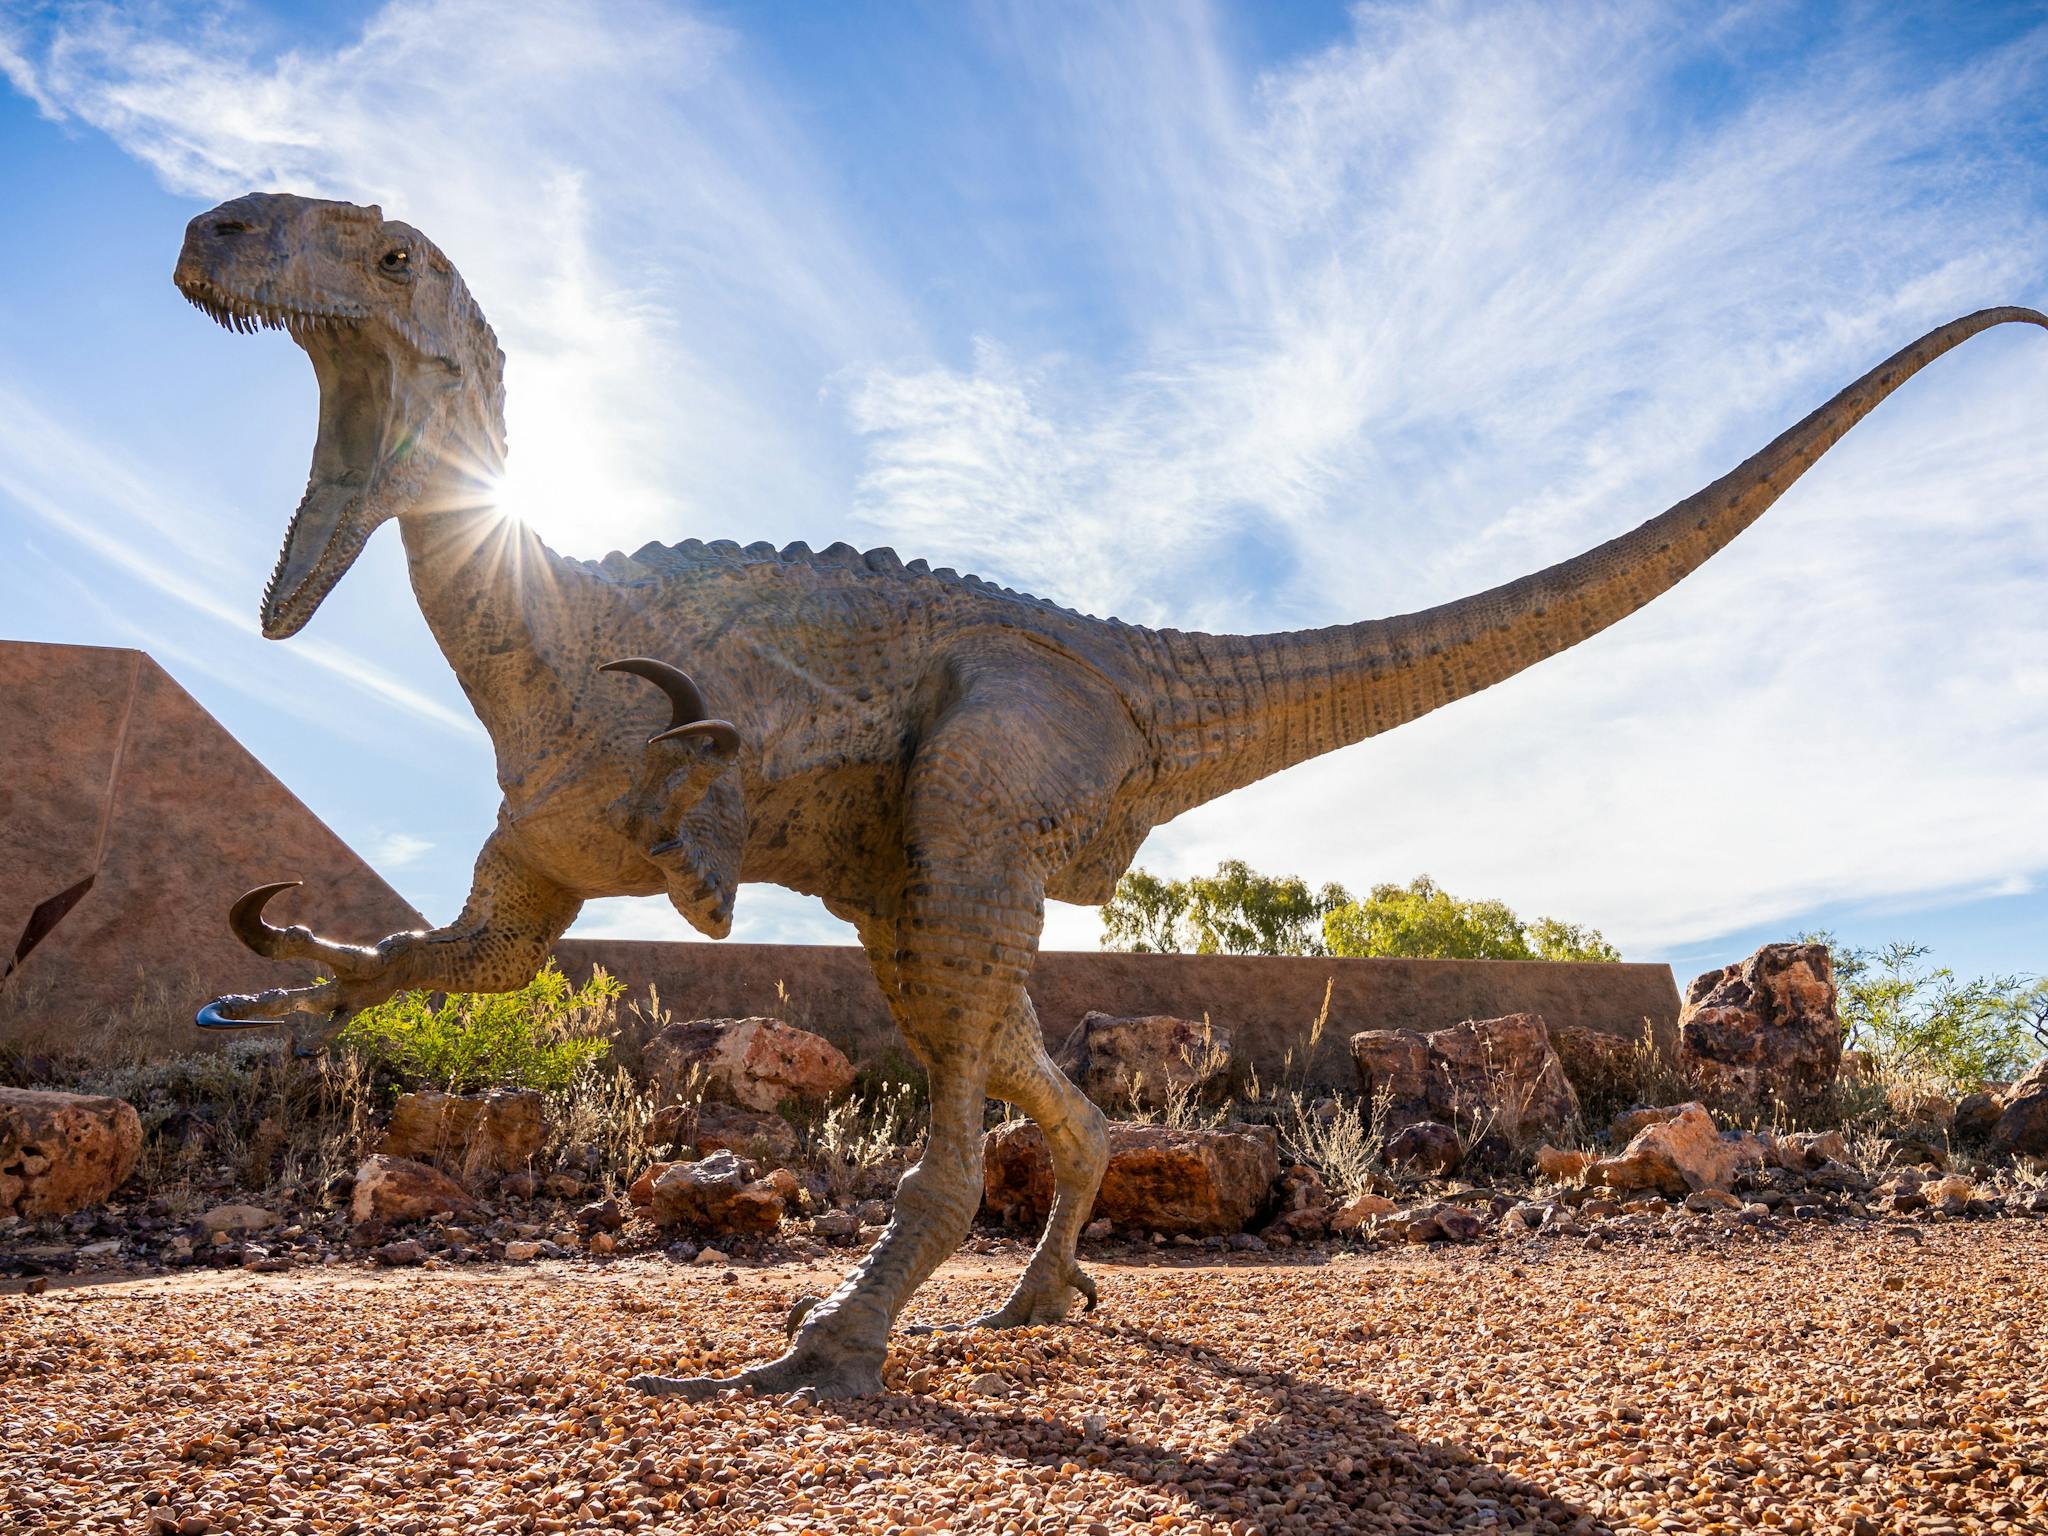 Australian Age of Dinosaurs at Winton